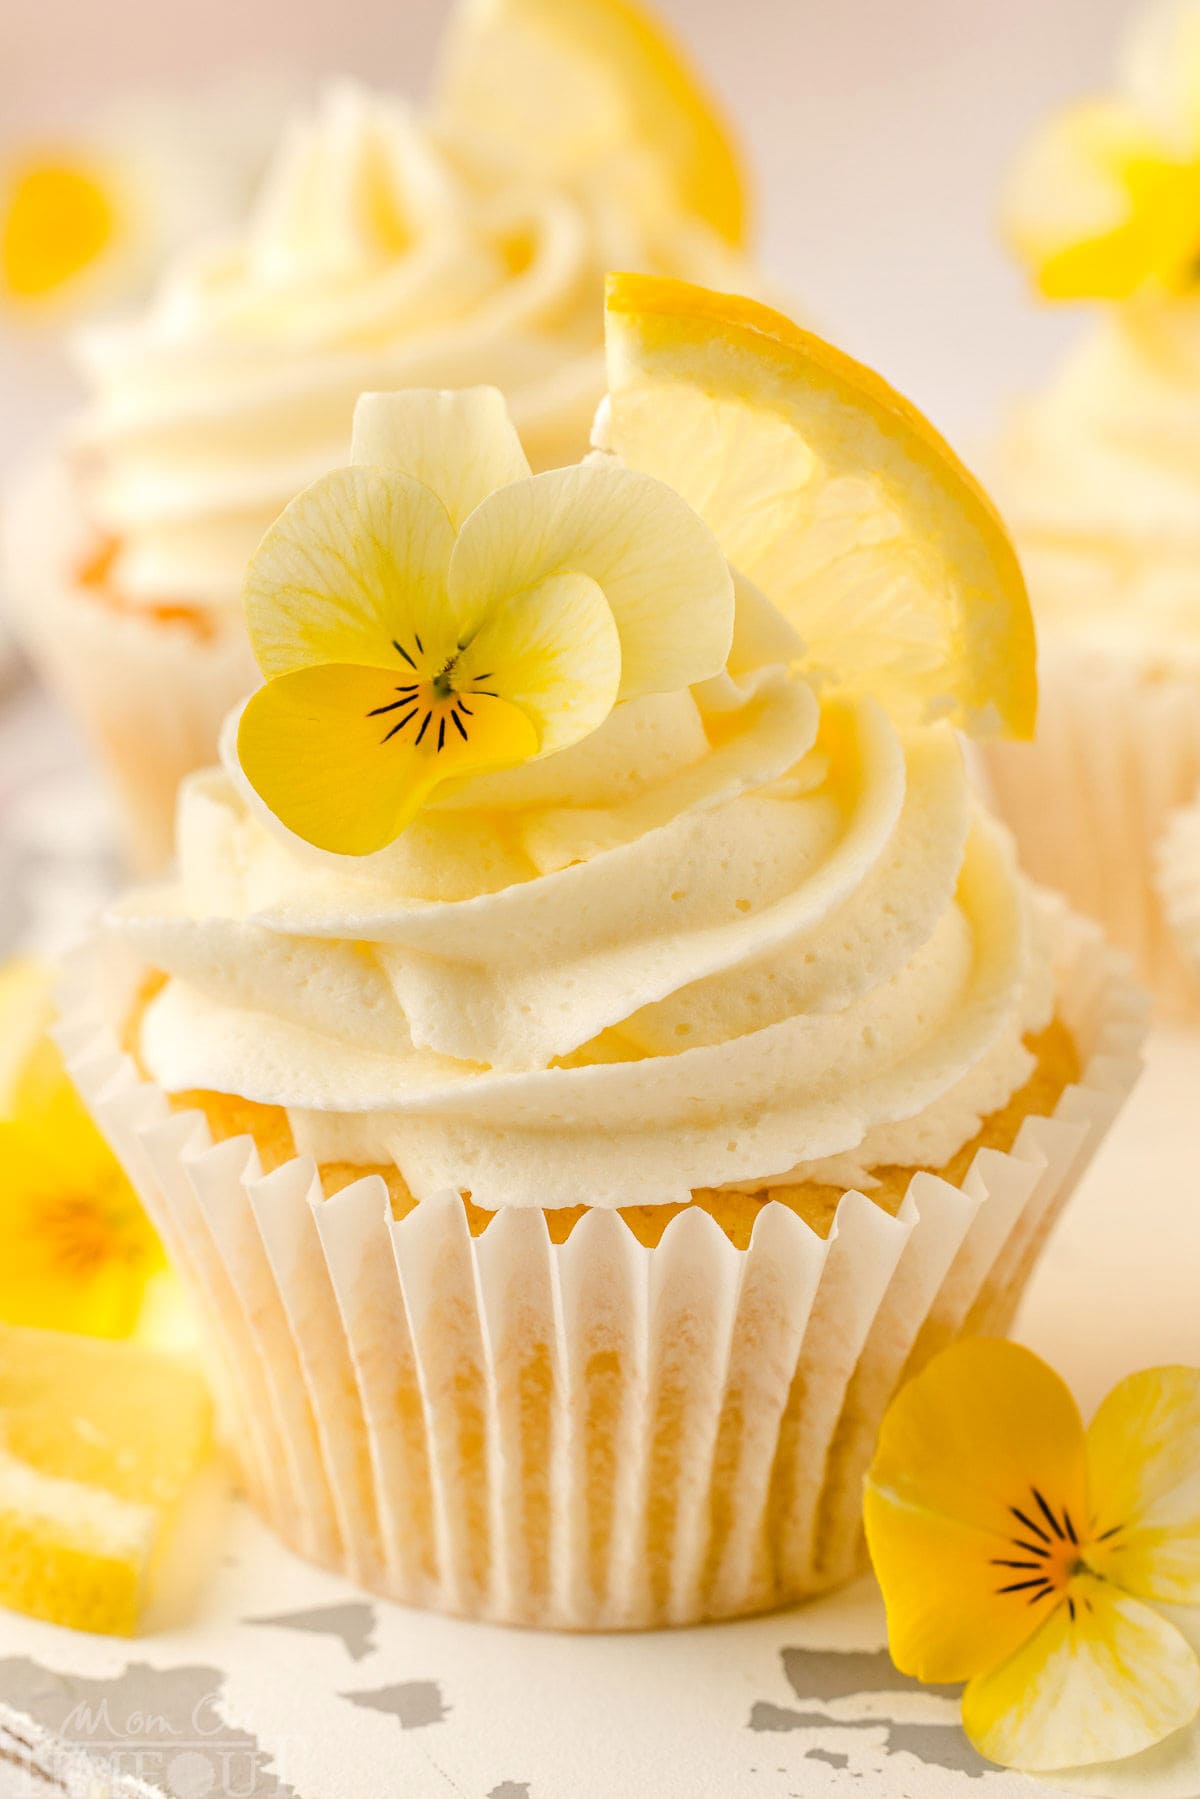 A lemon cupcake with a lemon wedge and flower garnishing it.